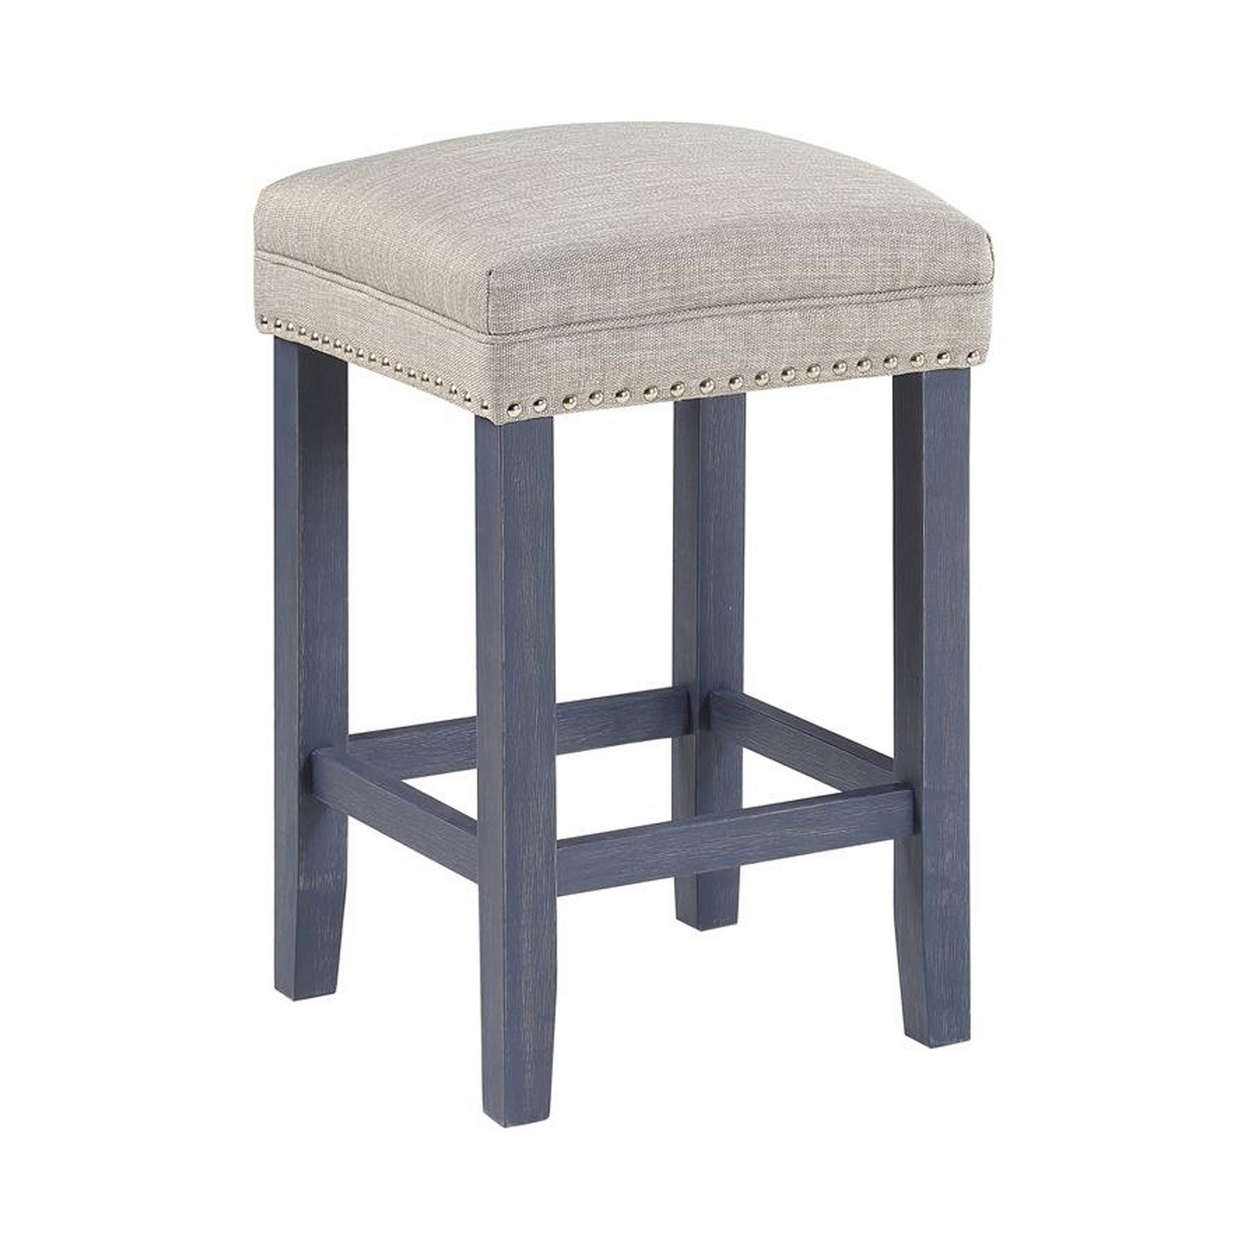 Eala 3 Piece Counter Height Table And Stool Set, Blue Wood, Gray Fabric- Saltoro Sherpi